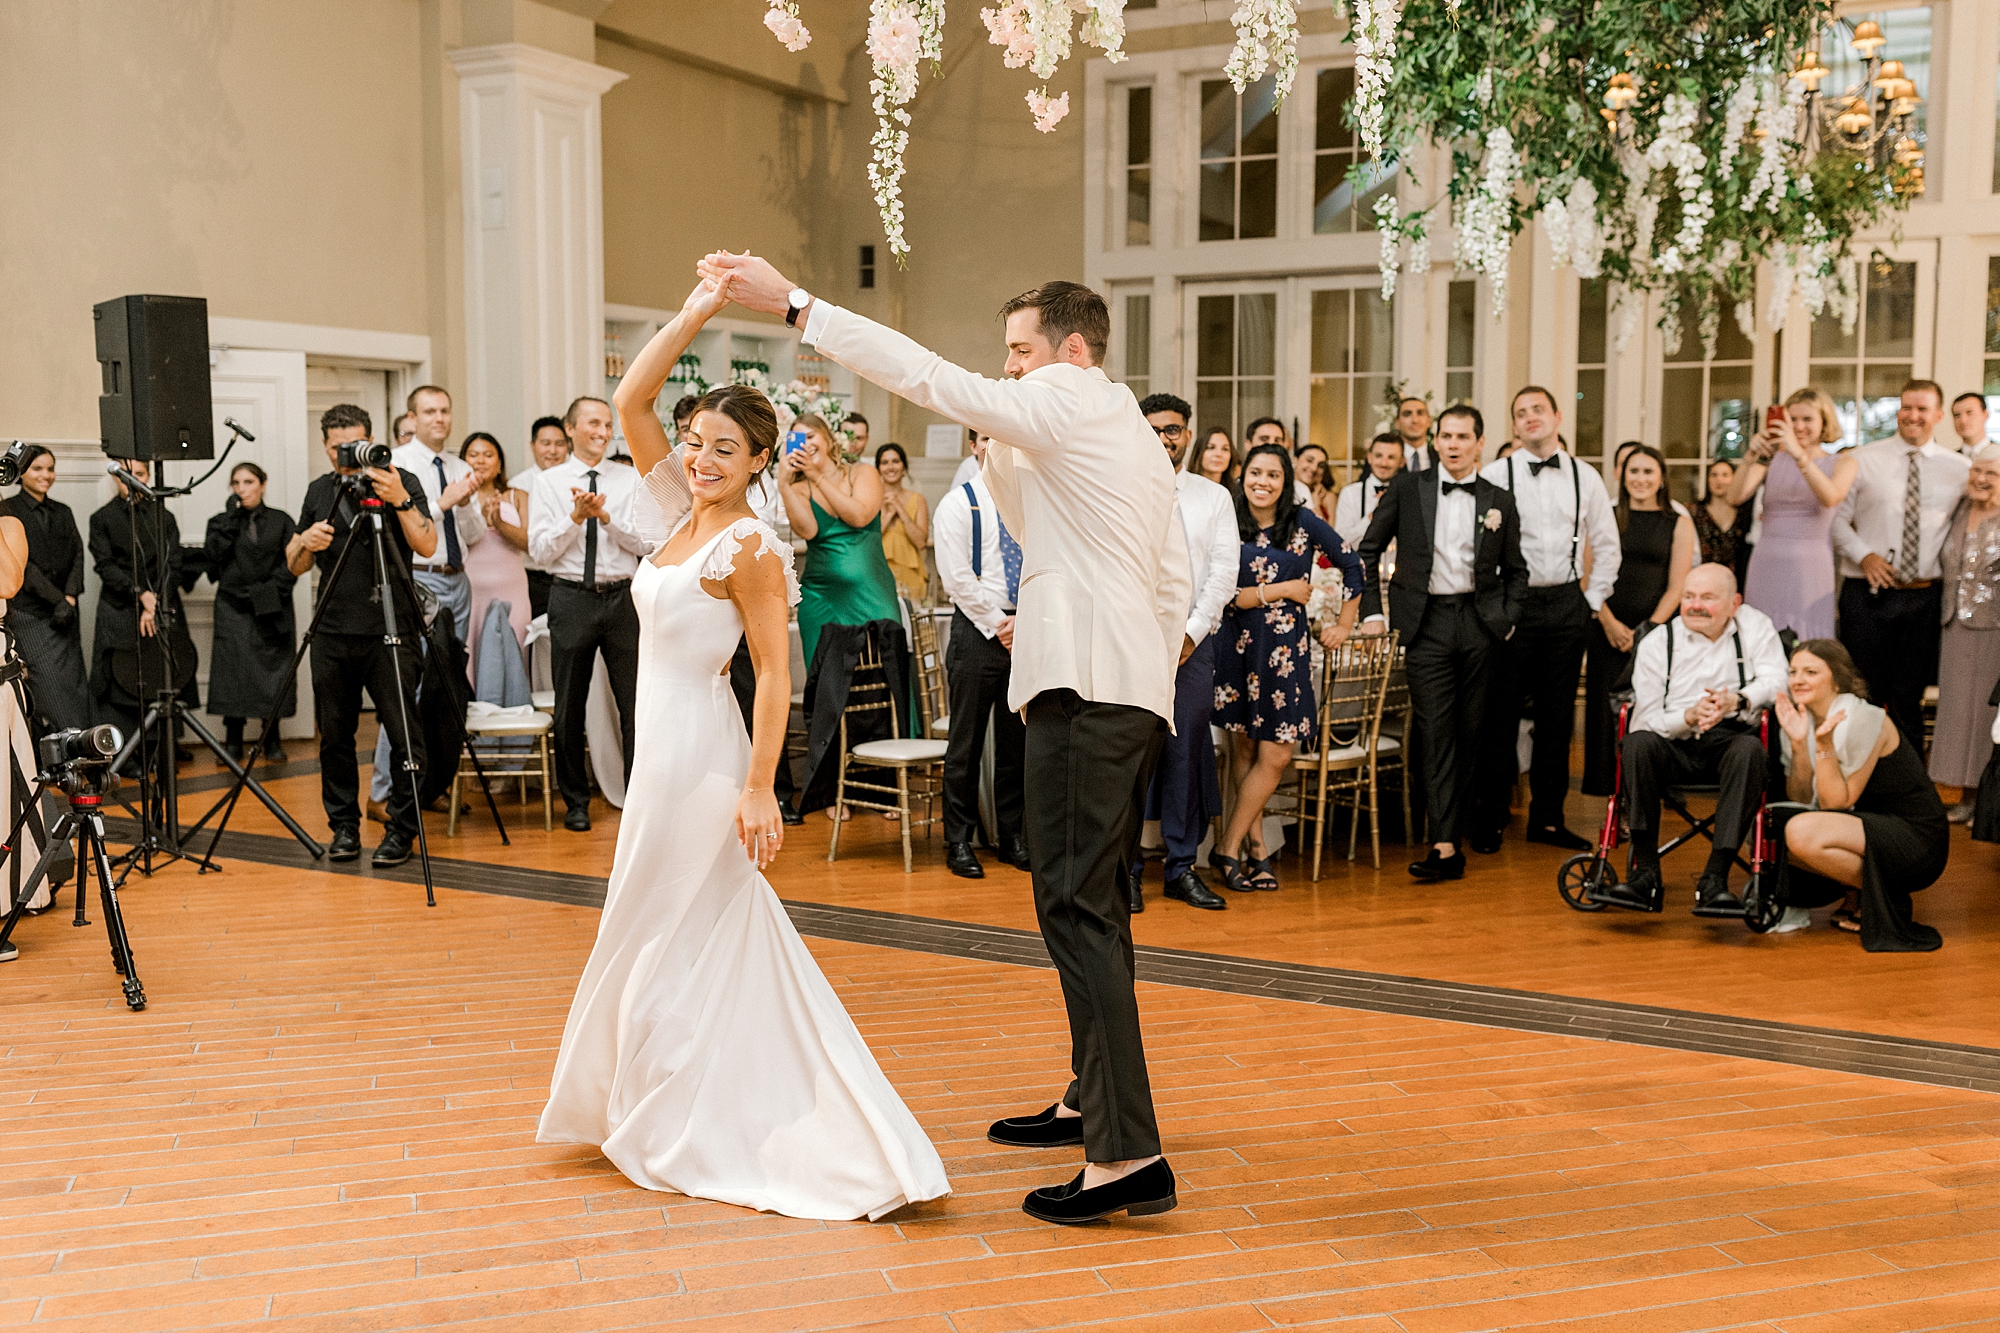 groom twirls bride during first dance at New Jersey wedding reception